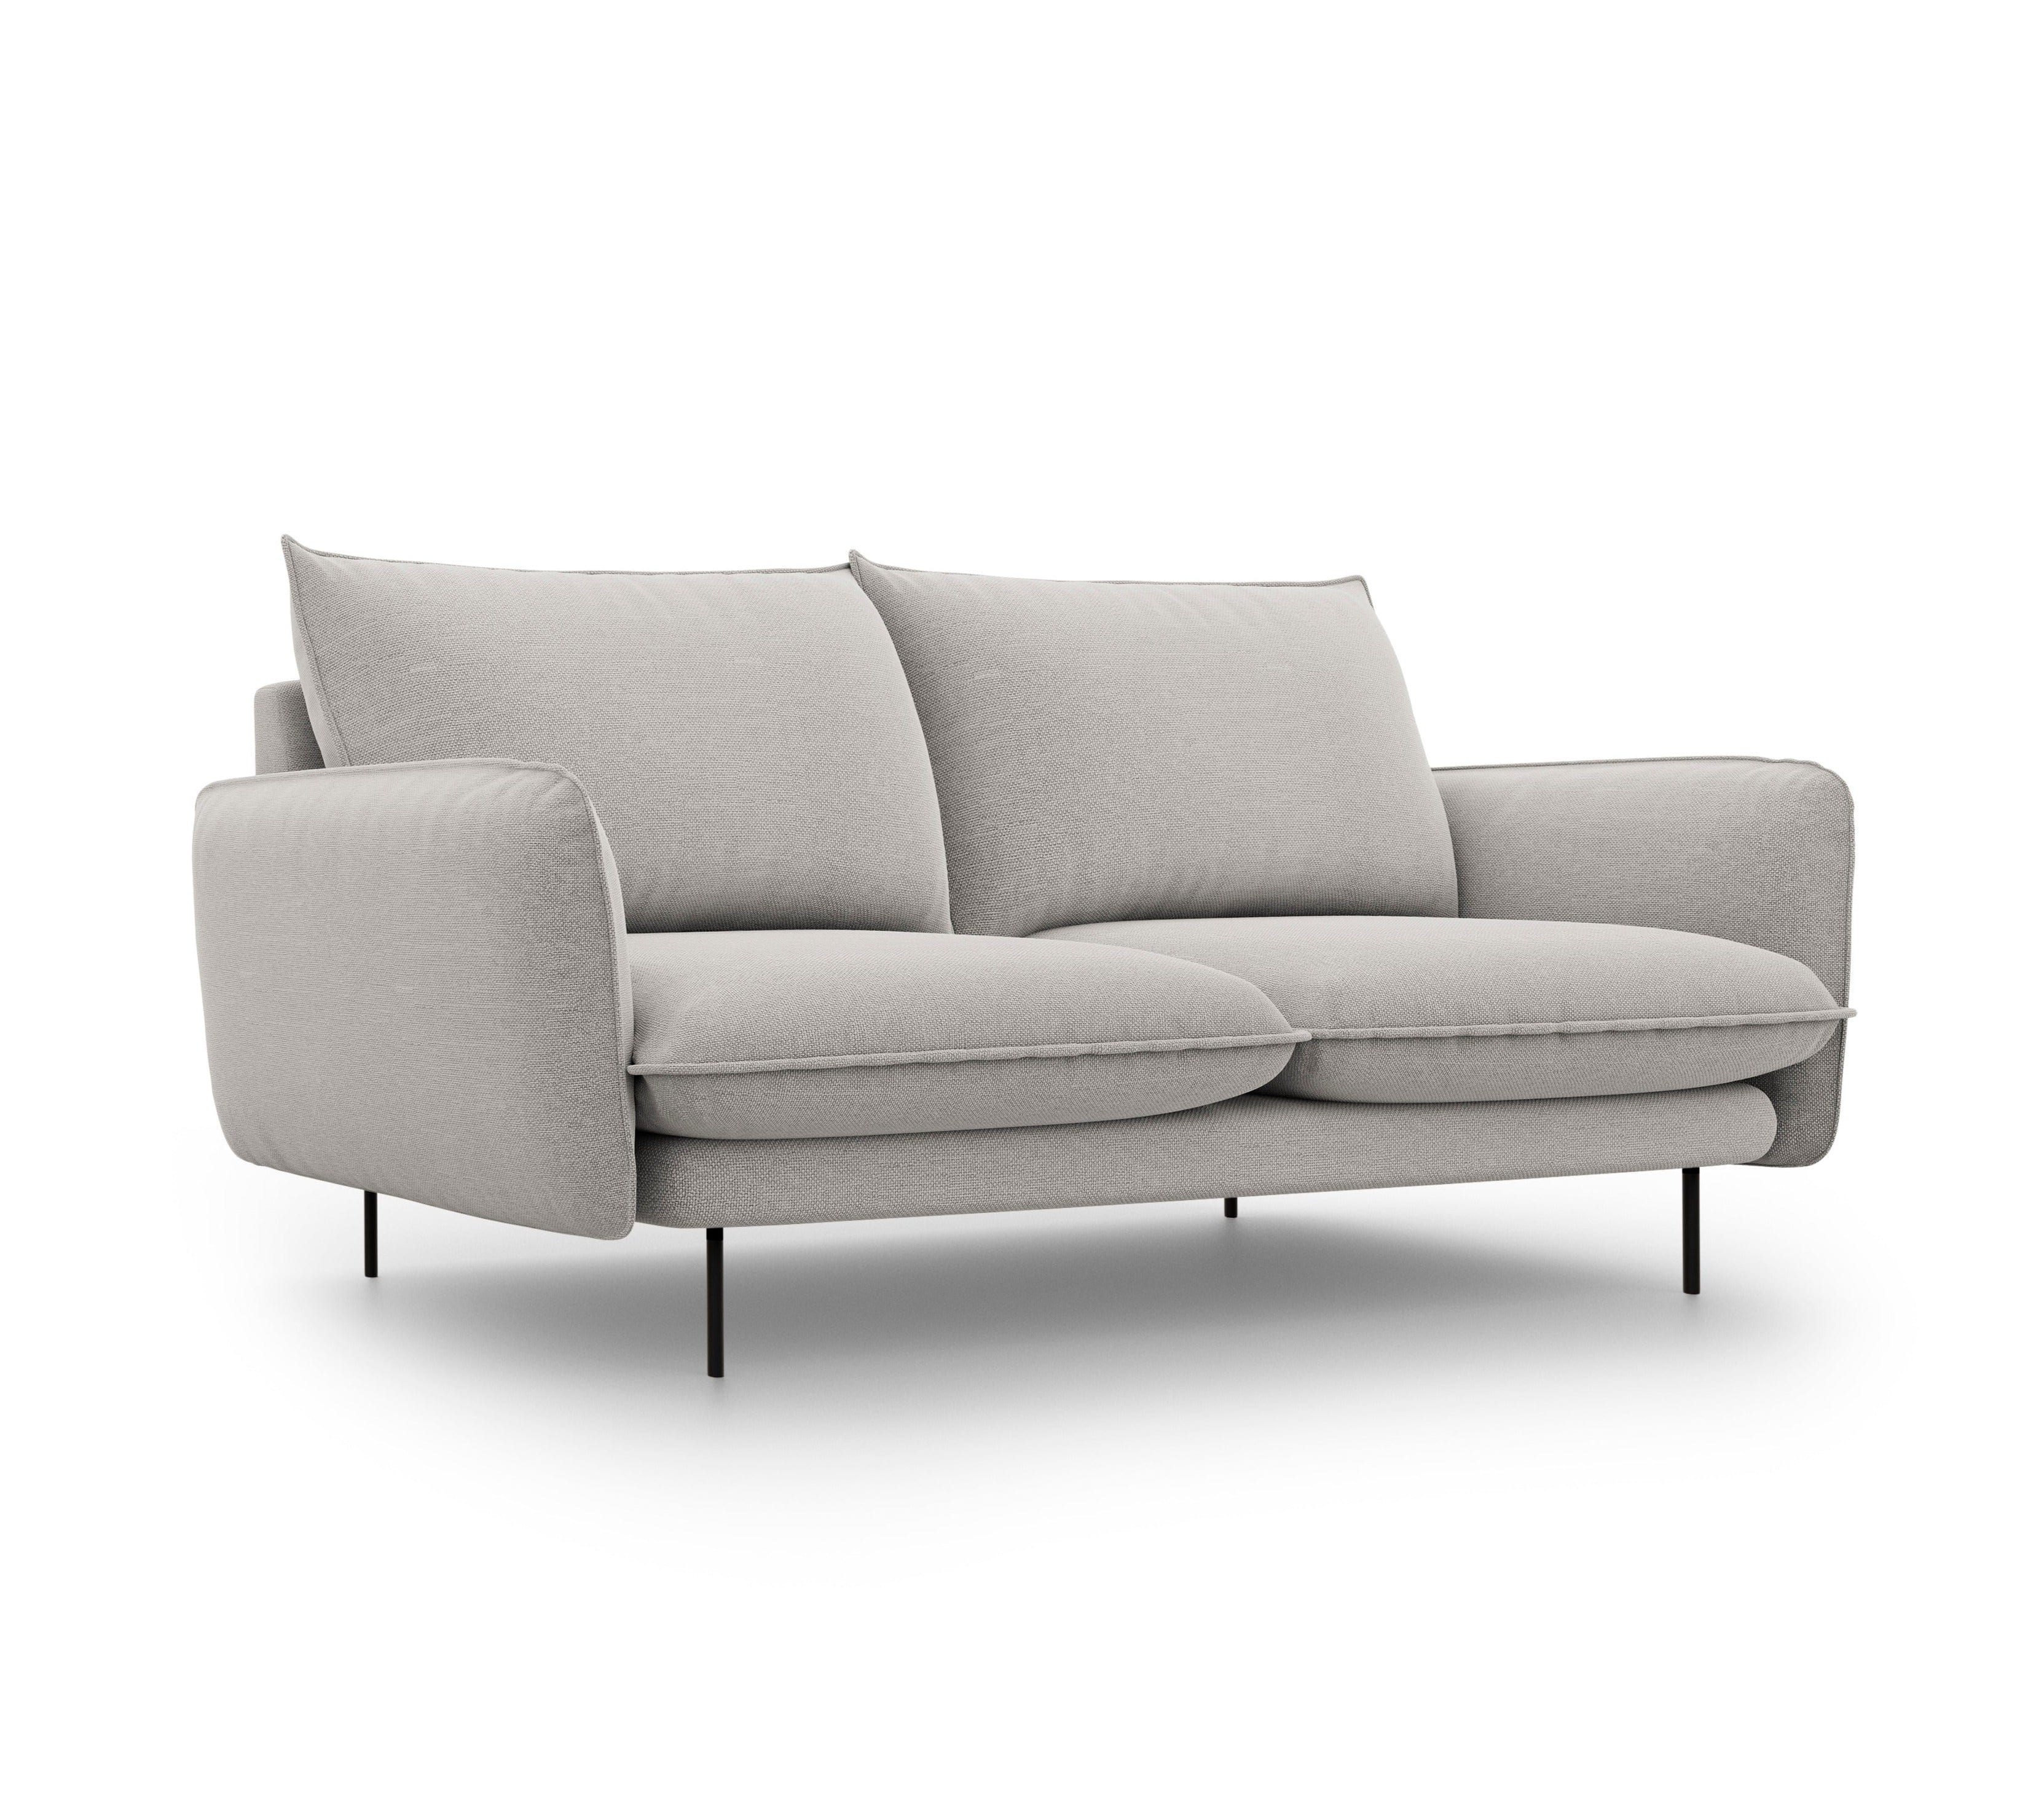 2-seater sofa VIENNA light grey with black base